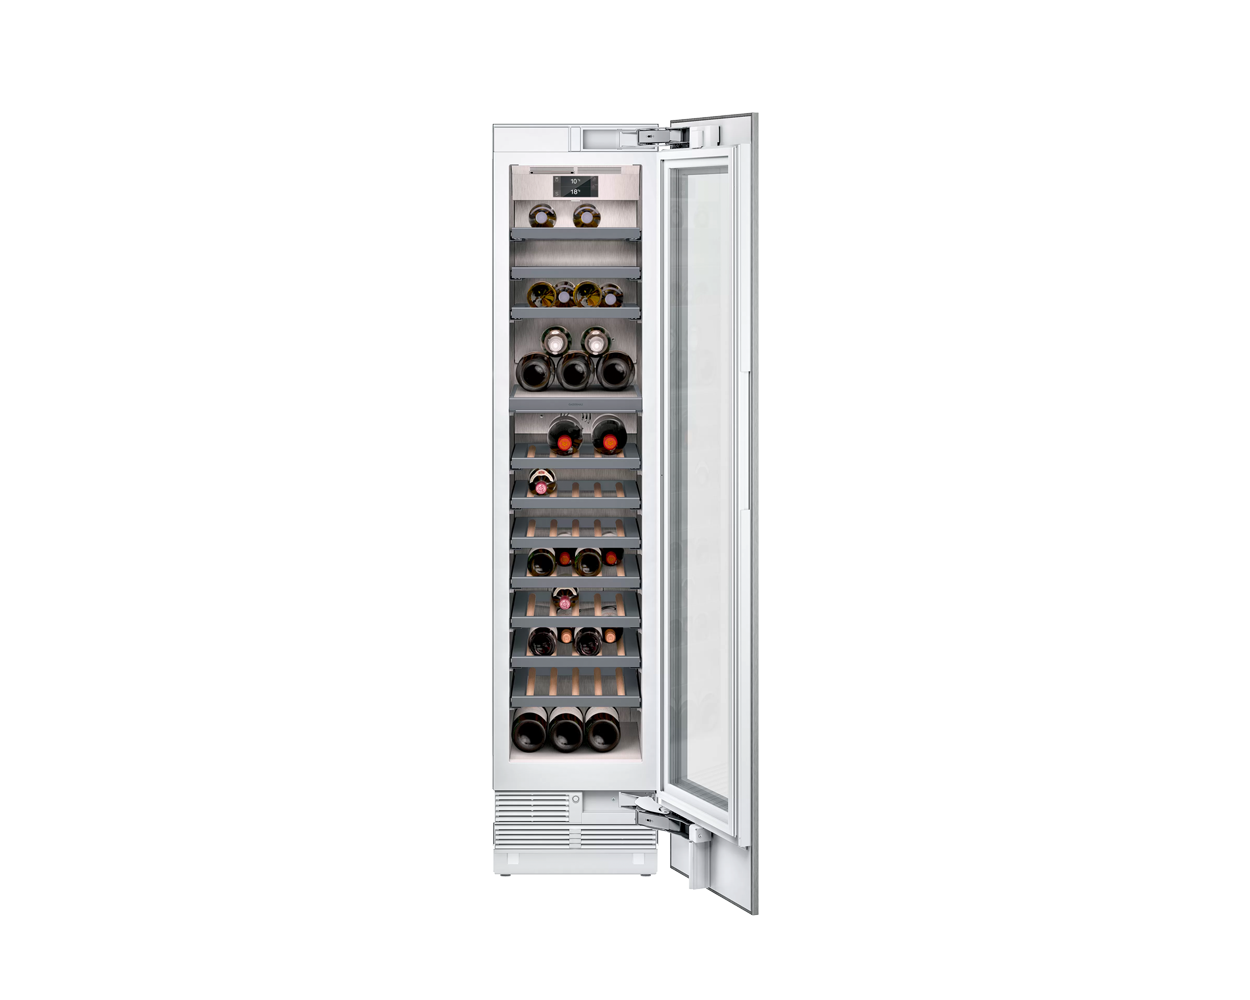 Luxury kitchen appliance brand Gaggenau 400 series Vario wine cabinet / wine cooler. Buy in the UK with Krieder.